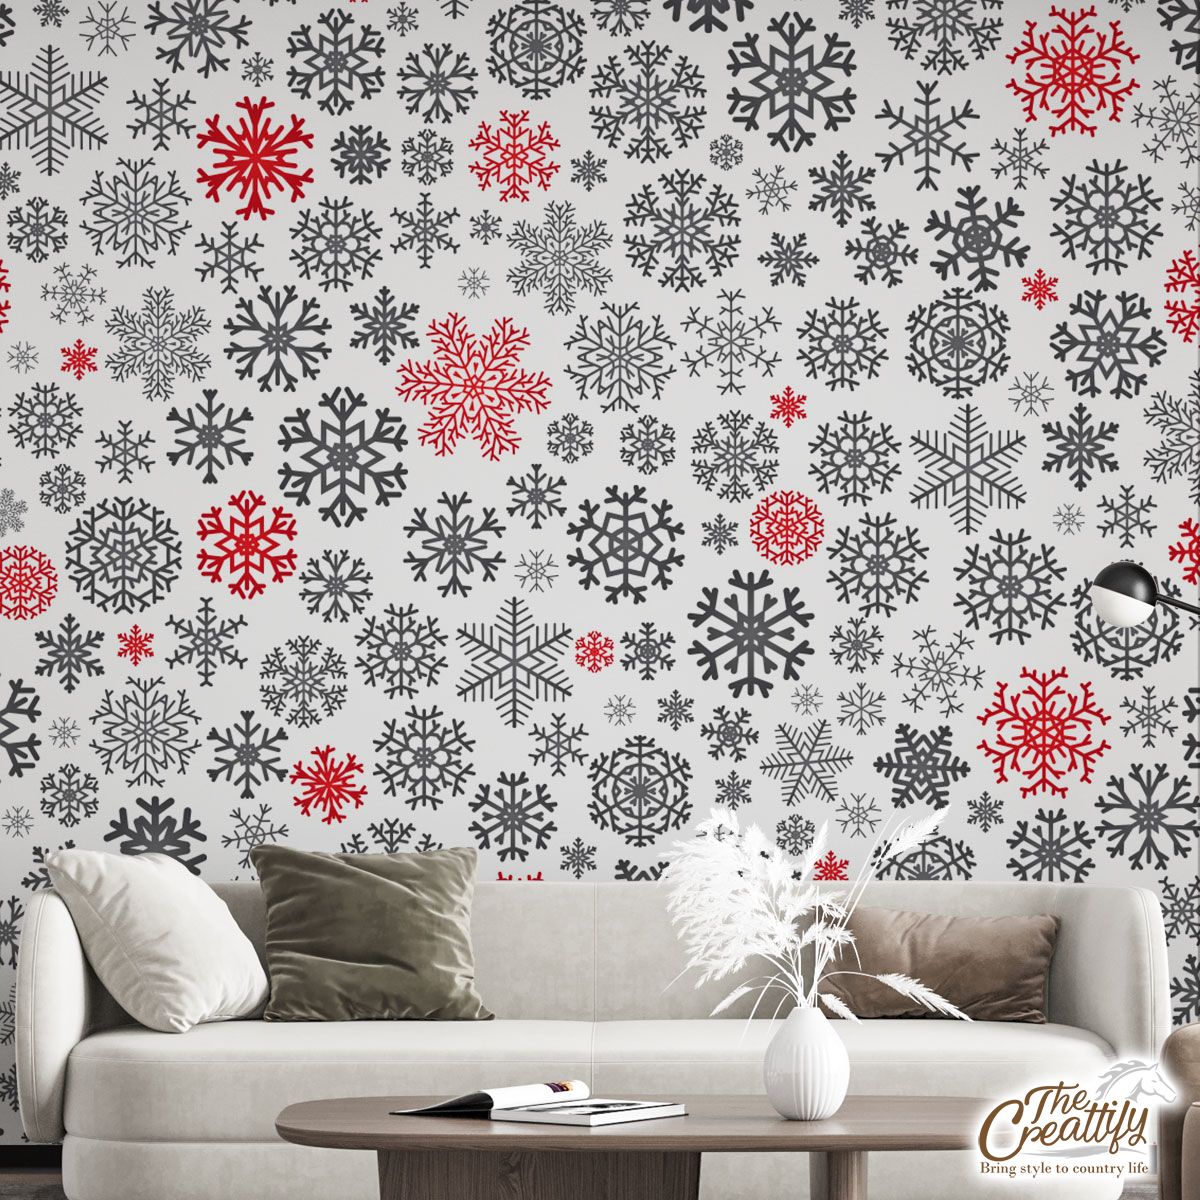 Snowflake Pattern, Snowflake Background, Christmas Snowflakes Wall Mural